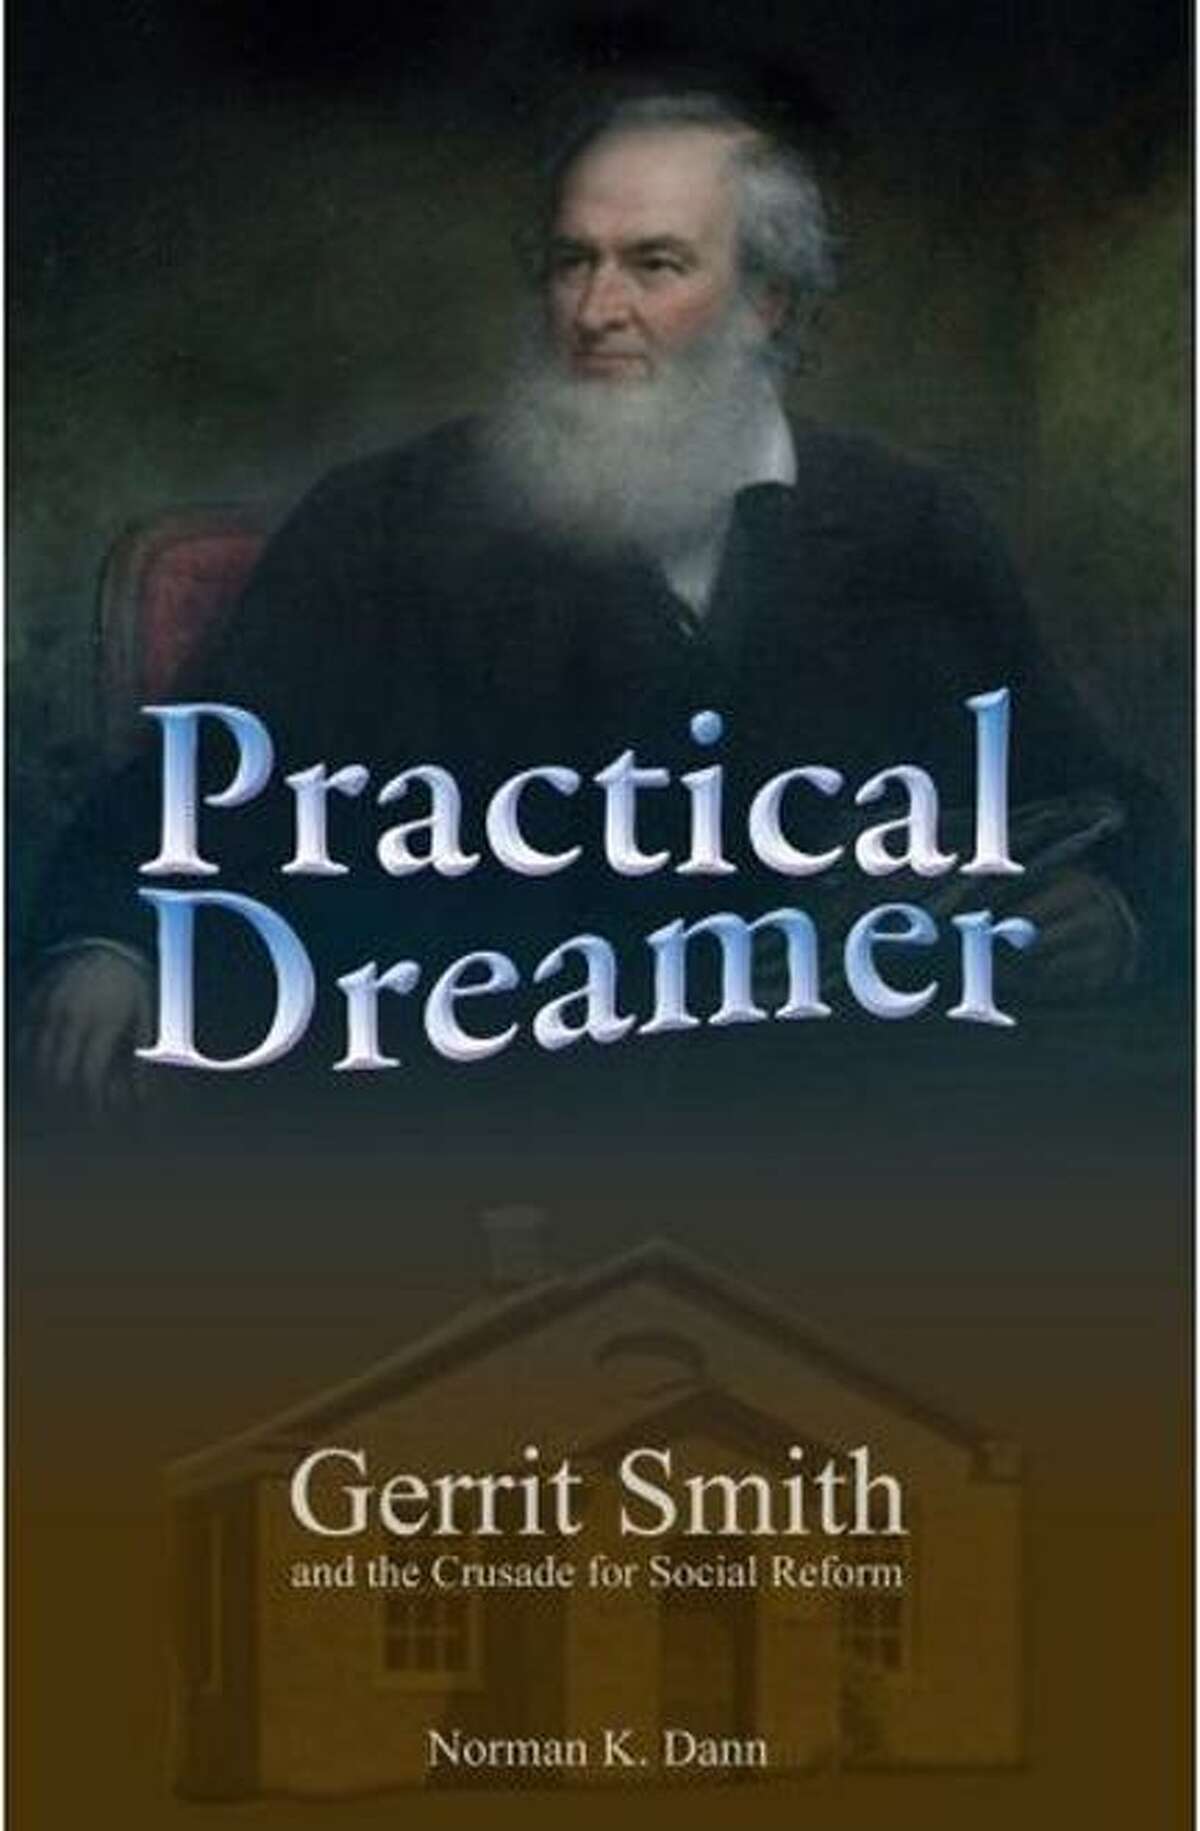 Dann's biography of Gerrit Smith